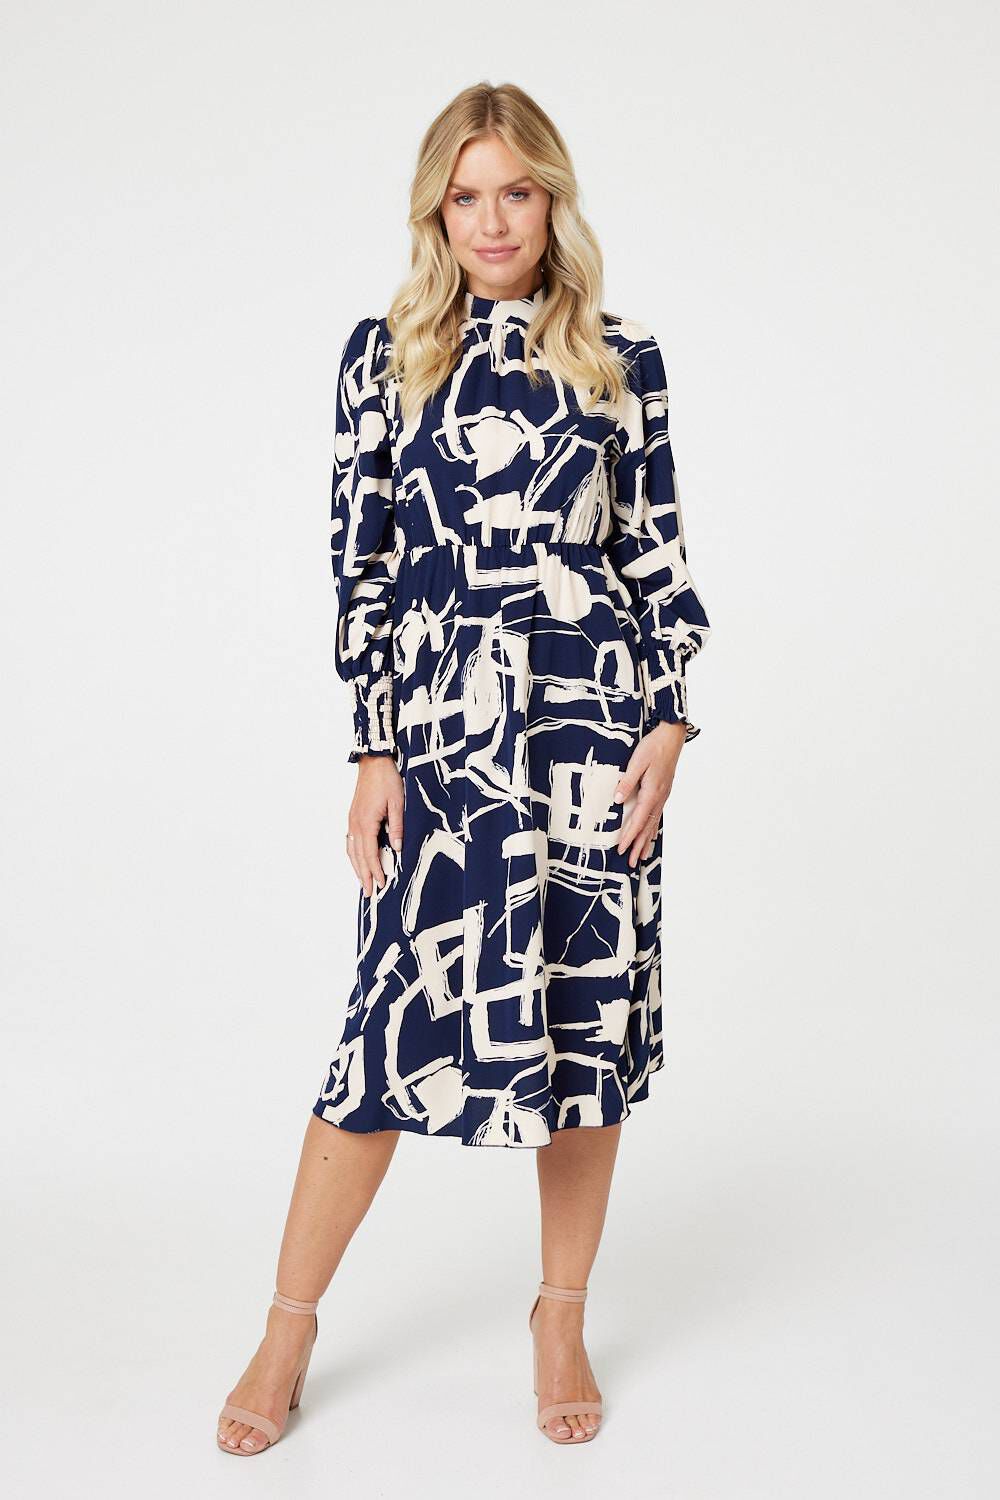 Izabel London Women’s Navy Blue and Cream Printed High Necked Midi Dress, Size: M